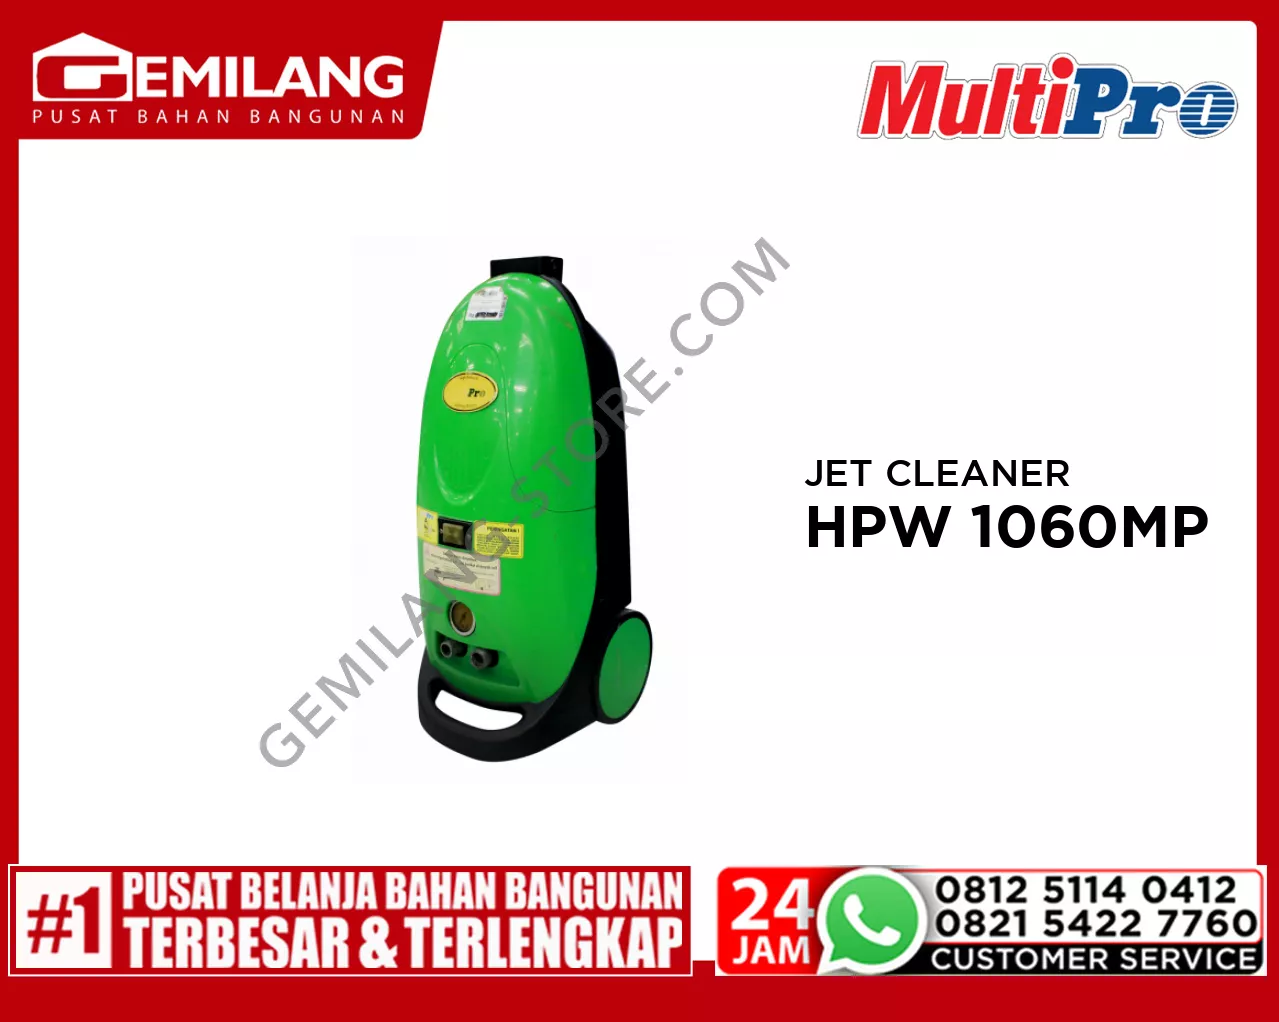 MULTIPRO JET CLEANER HPW 1060-MP